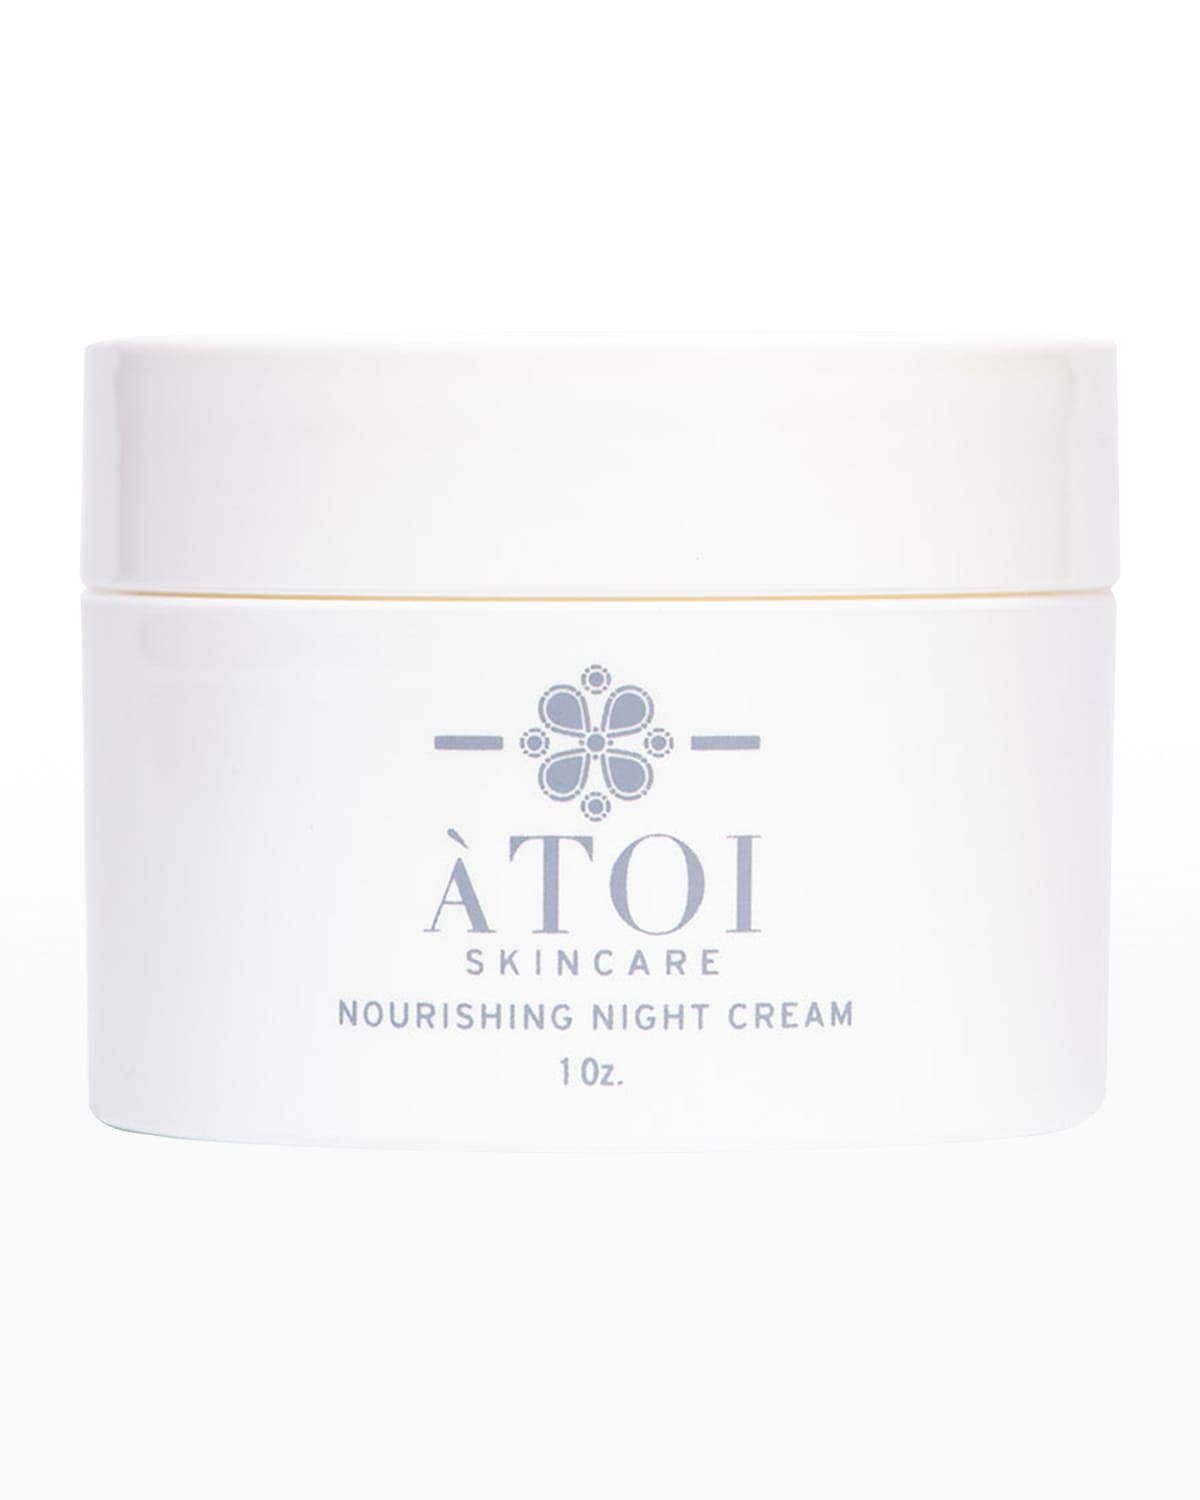 ATOI Skincare Nourishing Night Cream, 1 oz.